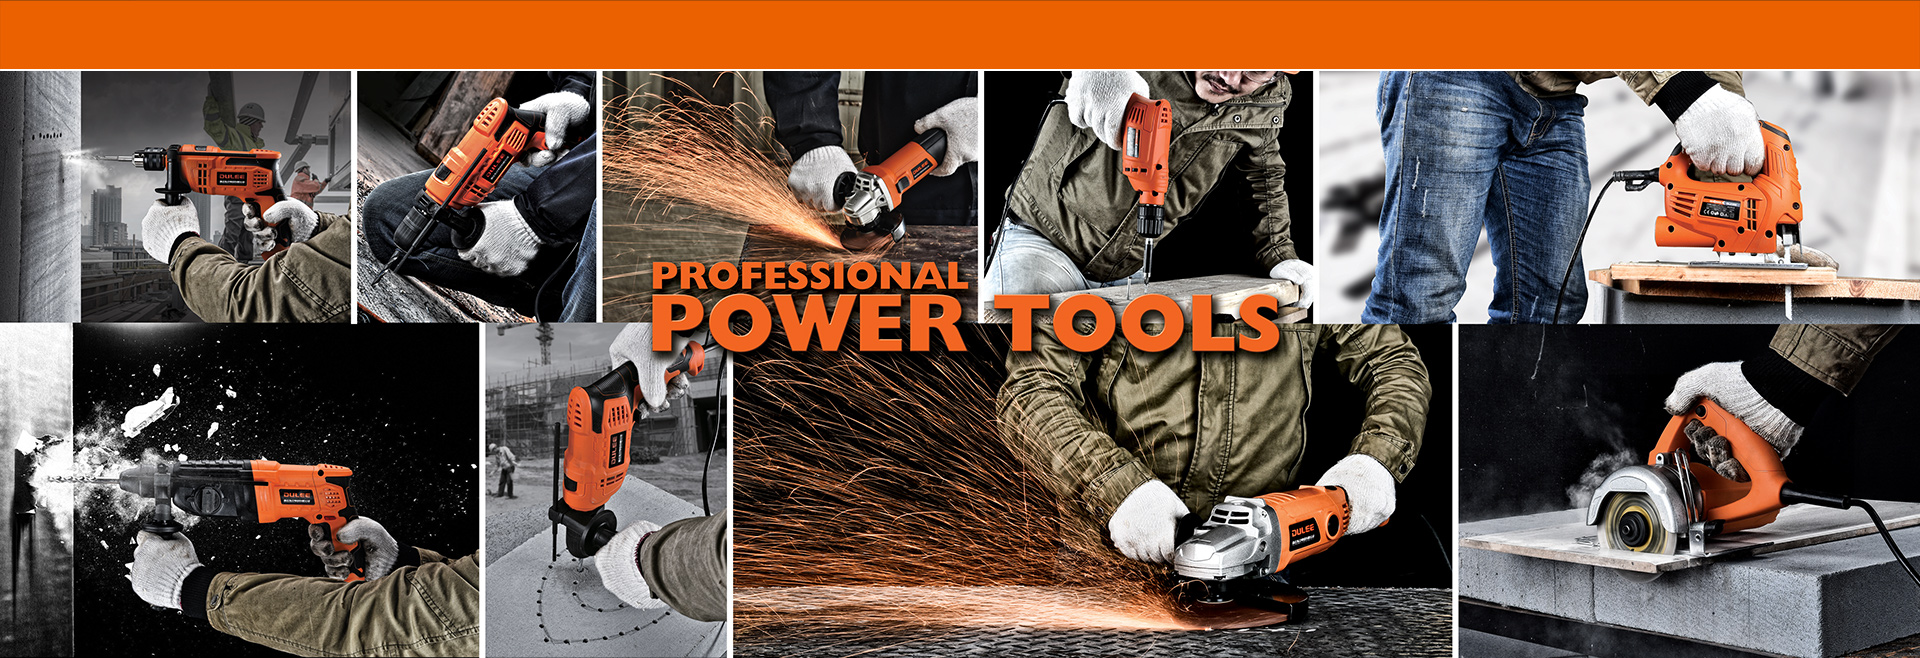 professional power tools